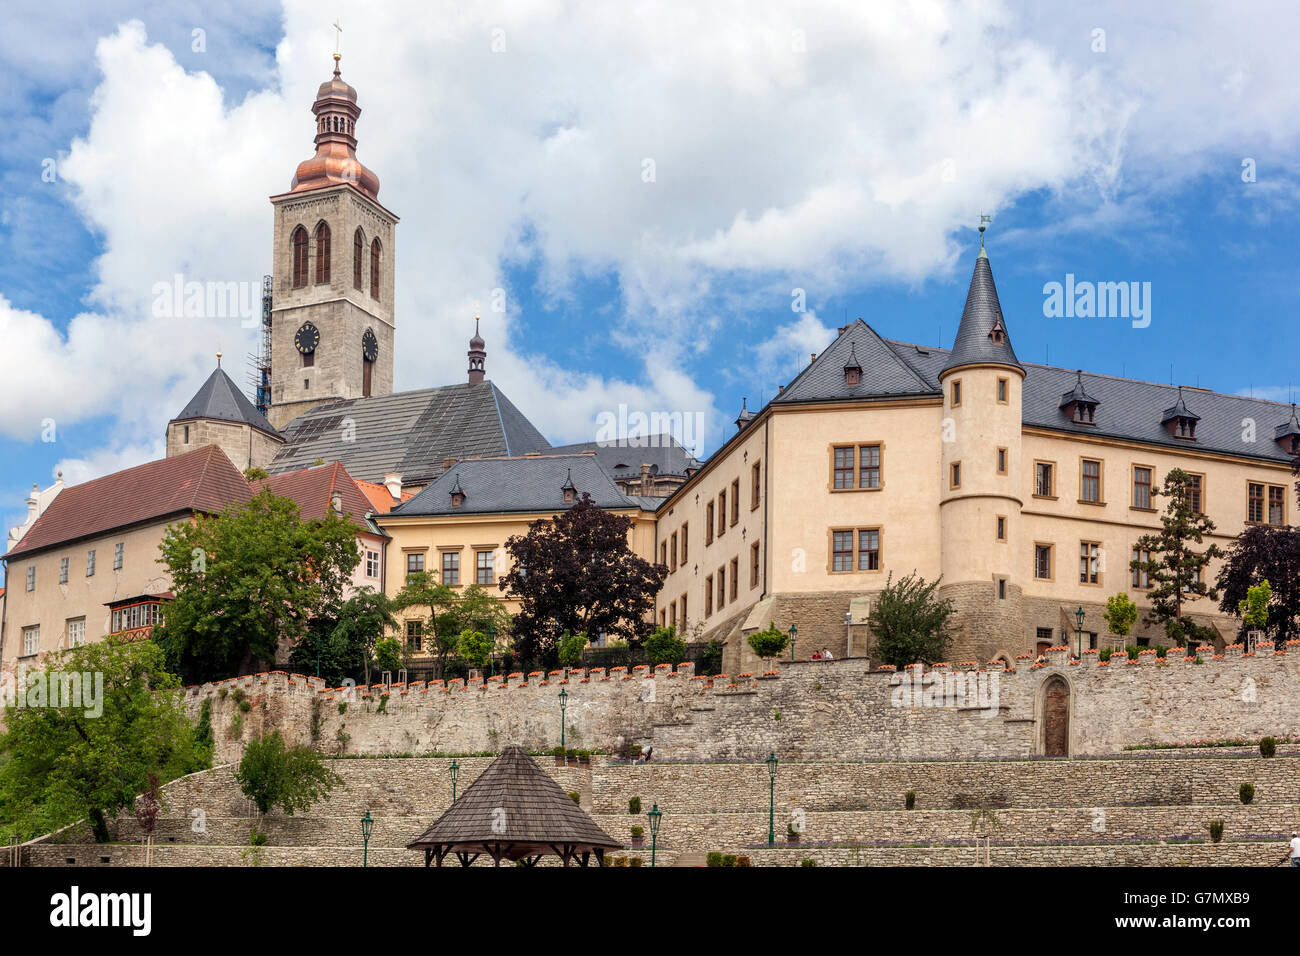 St James Church und Welscher Hof, Kutna Hora, UNESCO-Stadt, Tschechische Republik Stockfoto